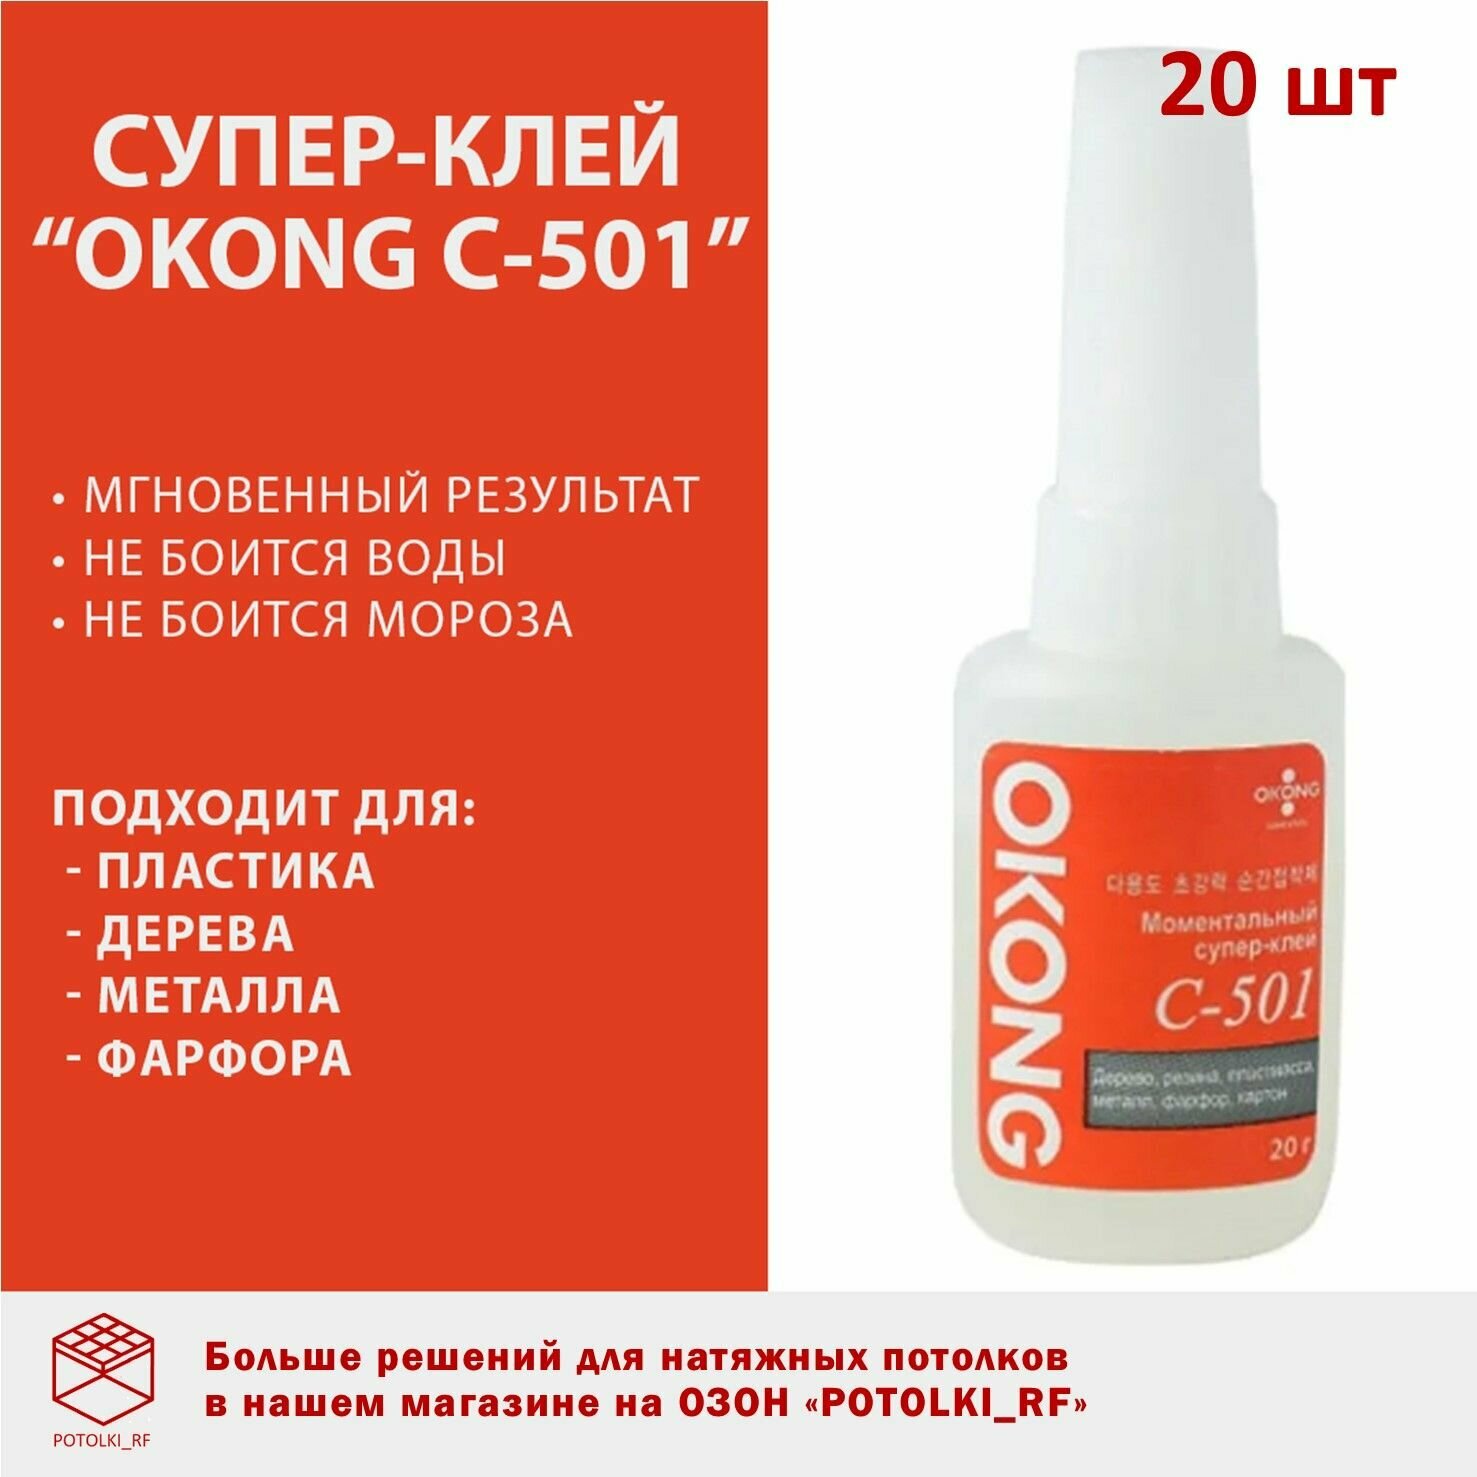 Суперклей OKONG C-501, 20 шт